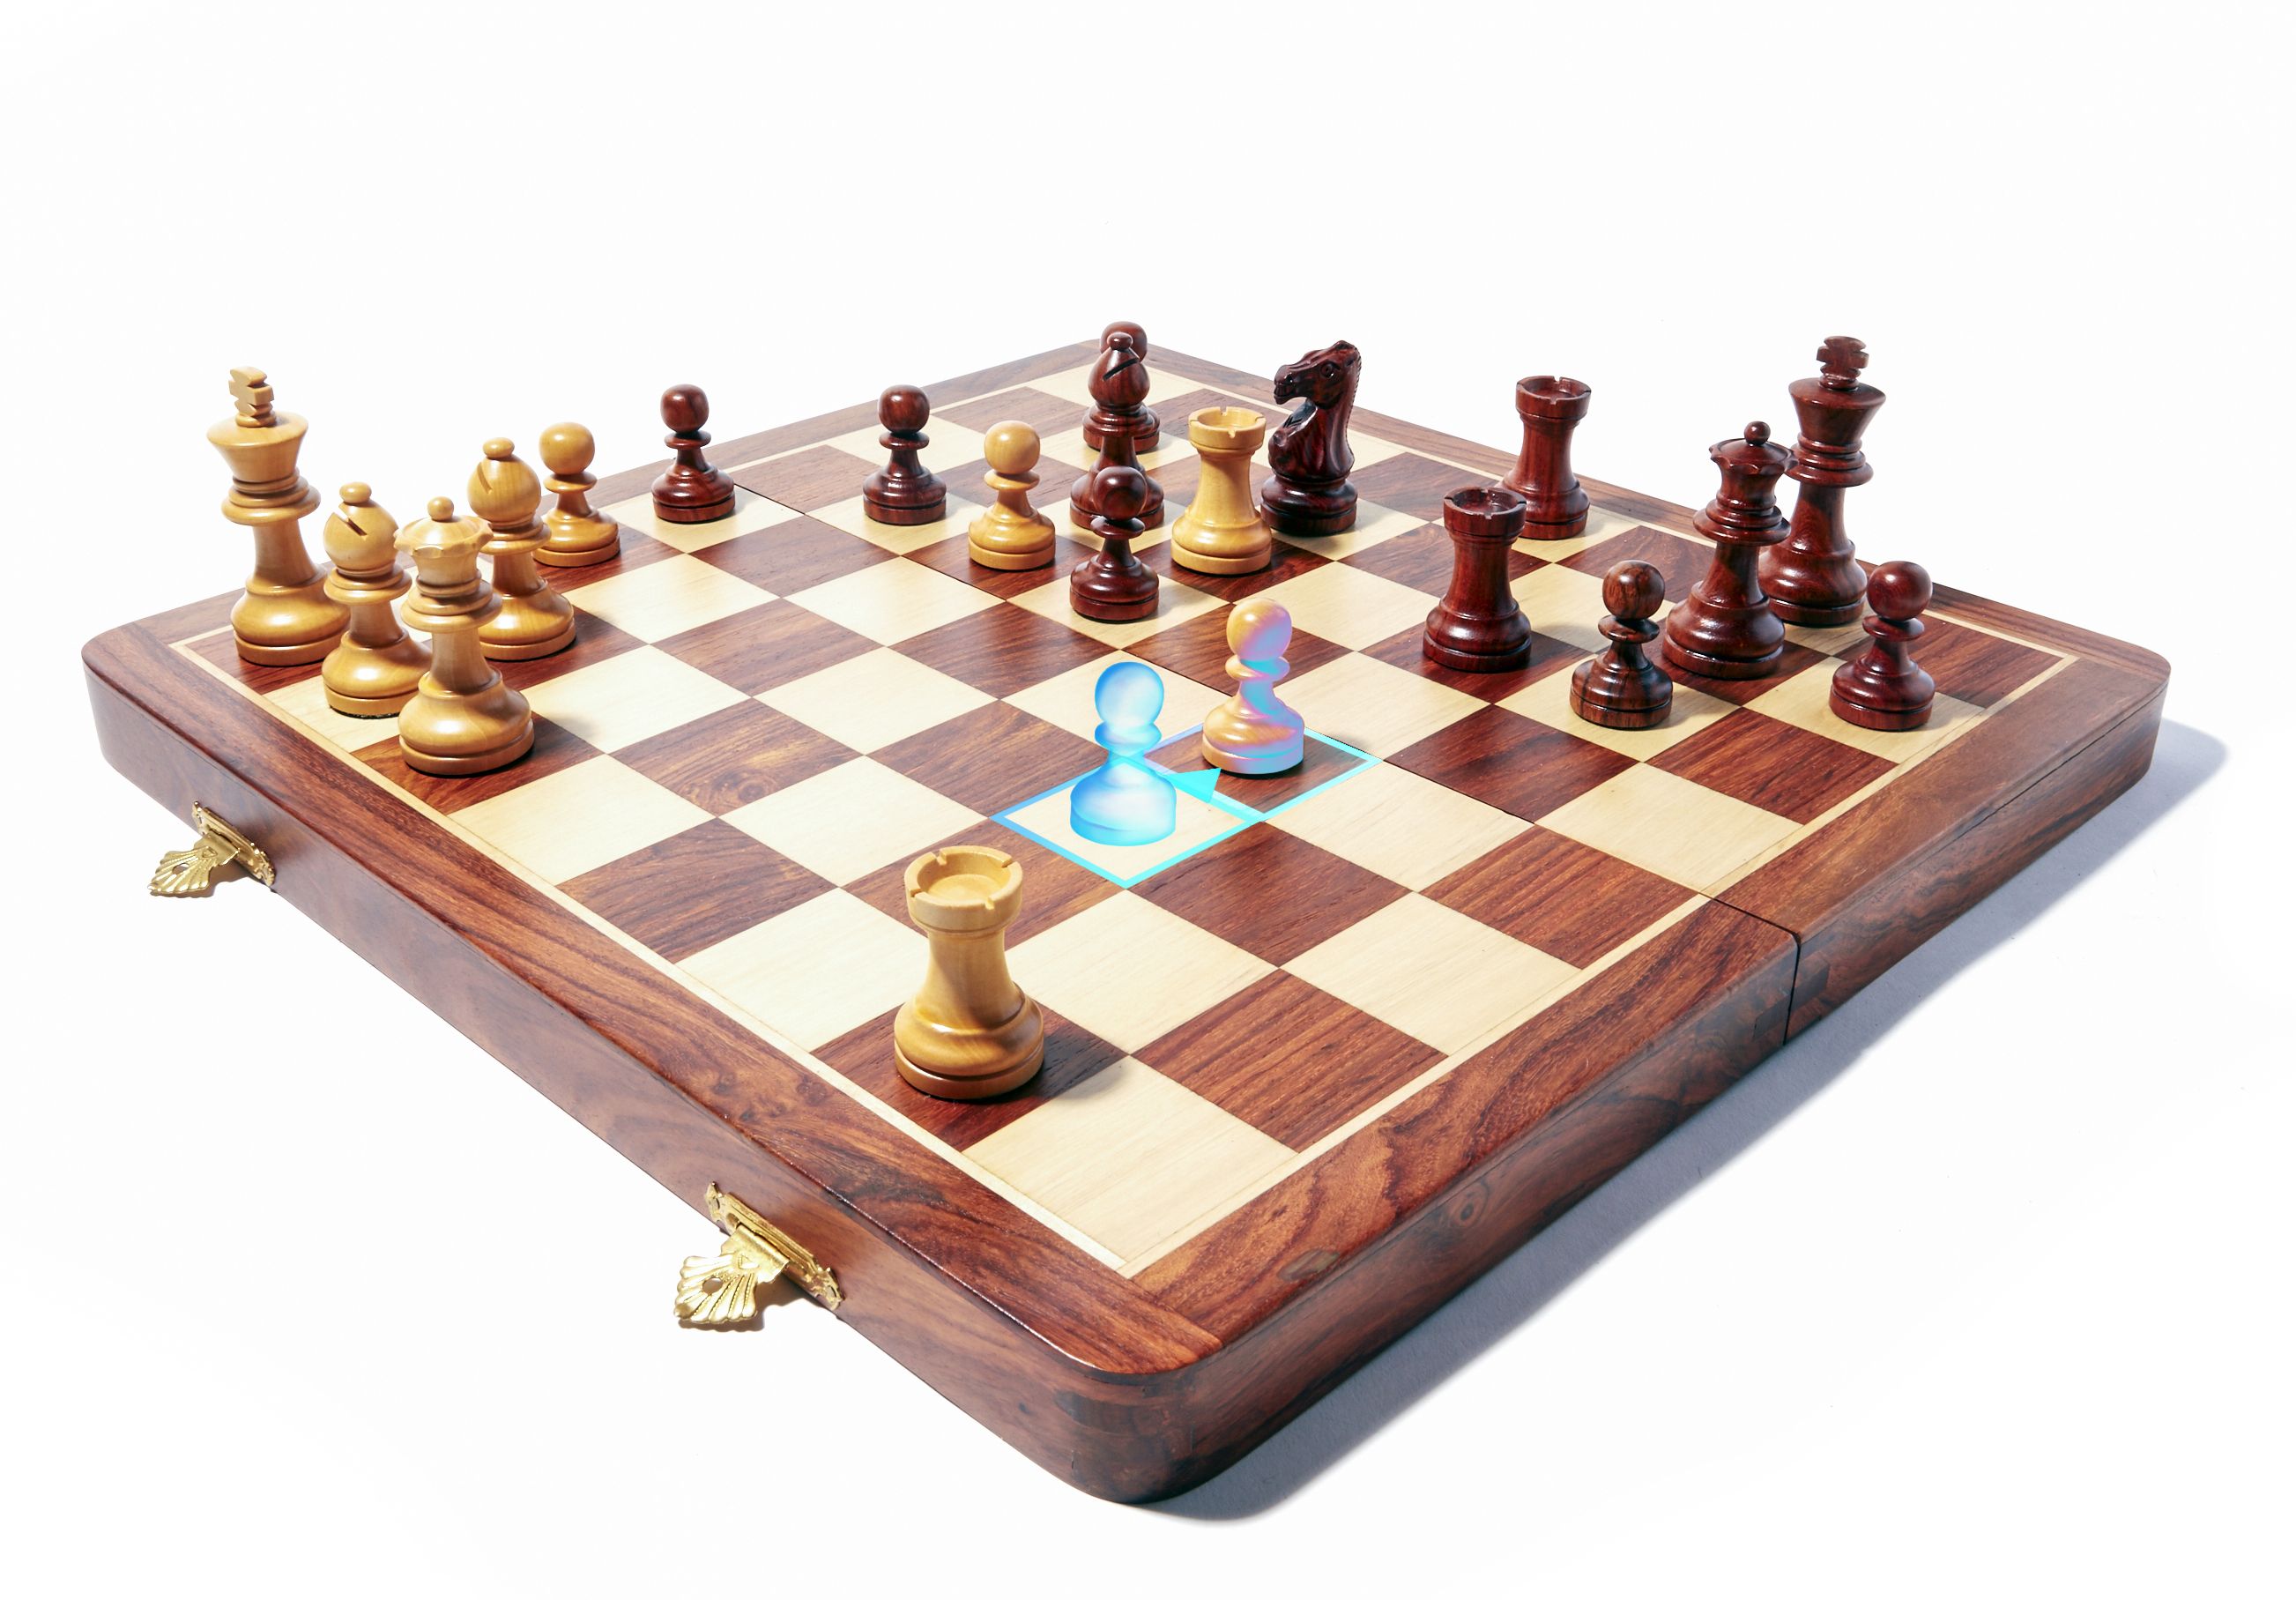 Alphazero 19 vs Stockfish 18, Computer Chess Match